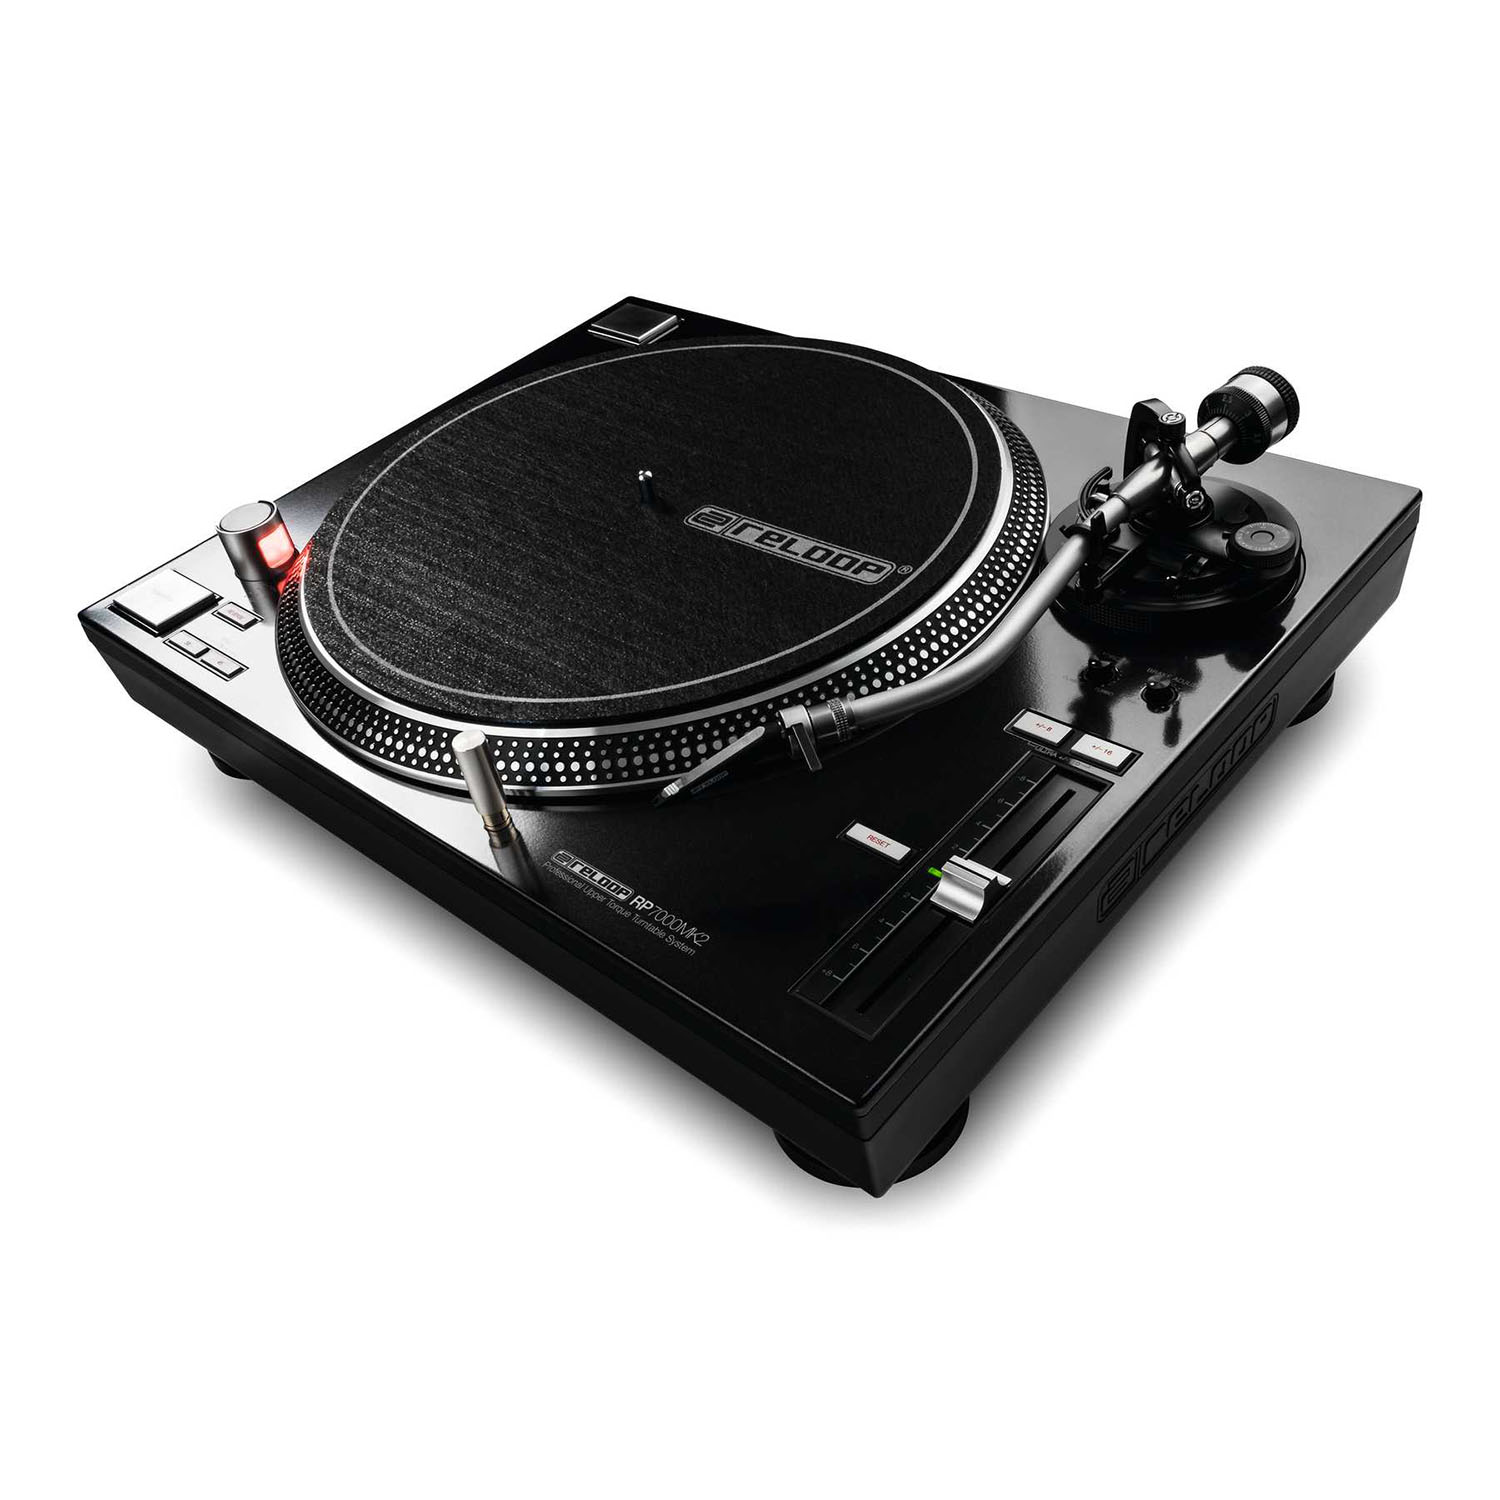 Reloop RP-7000mk2 DJ搓碟scratch唱盘黑胶唱机turntable唱盘 - 图1